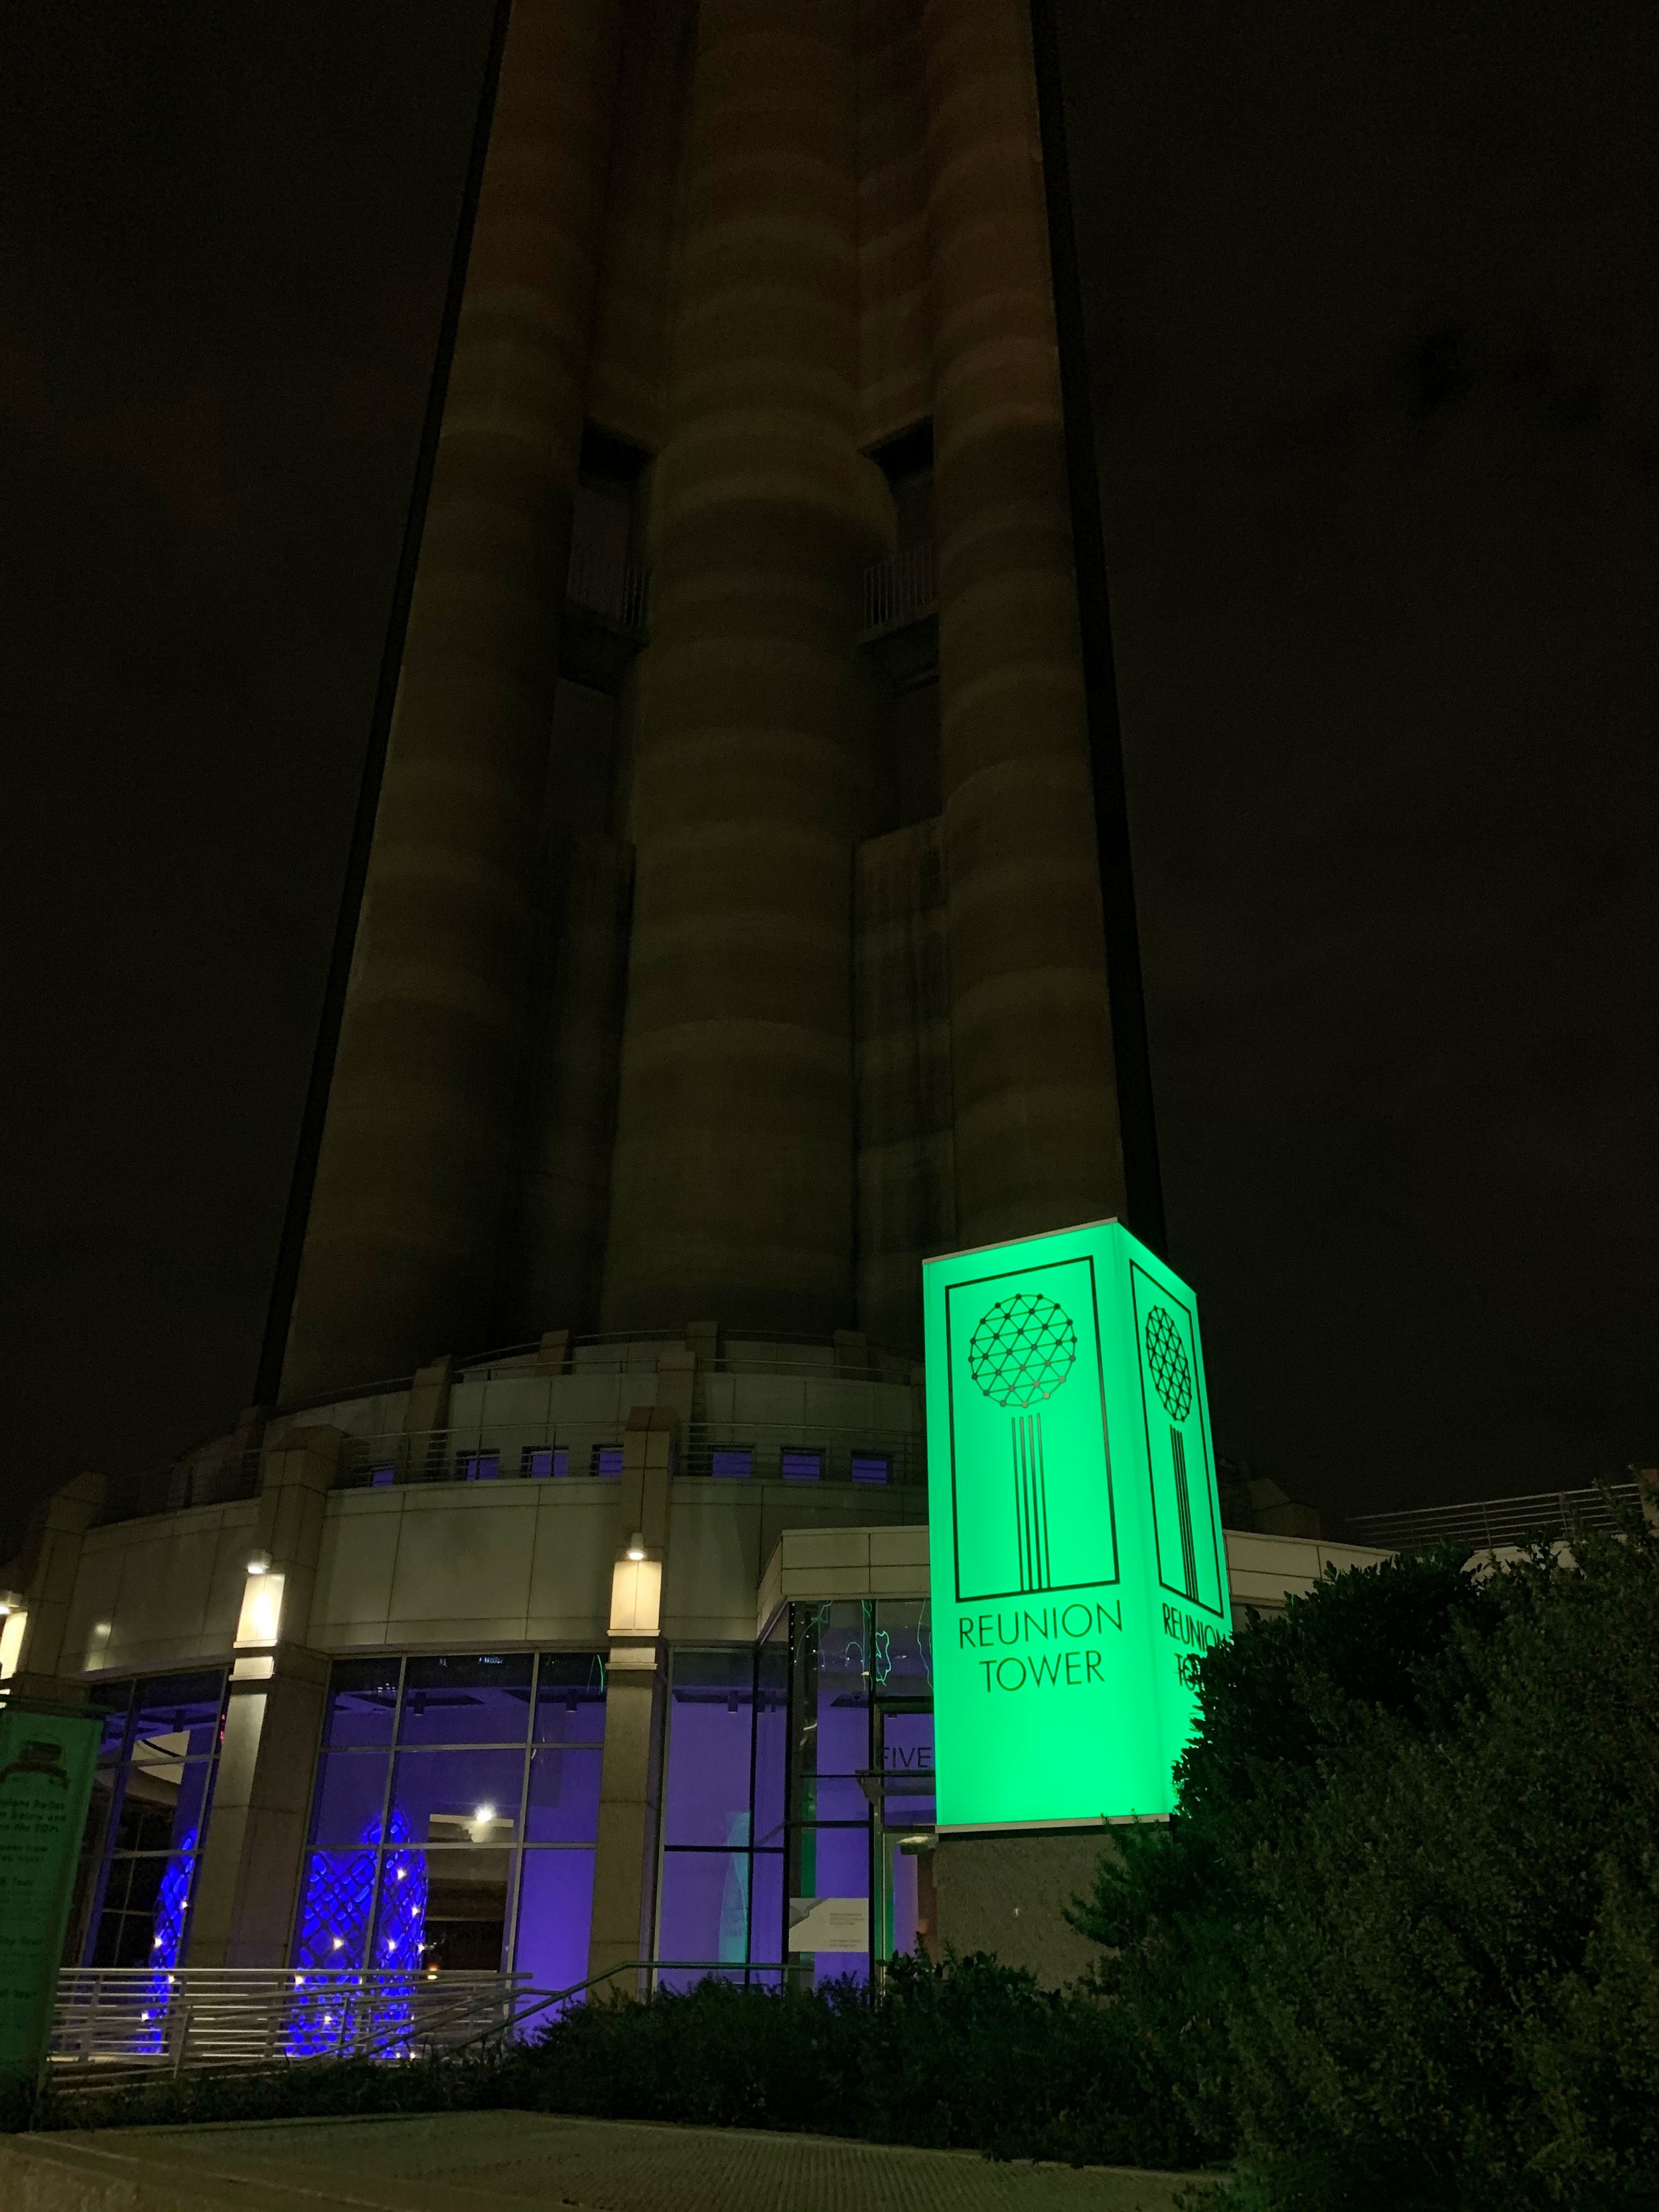 Reunion-tower-dallas-texas-night-sign.jpg